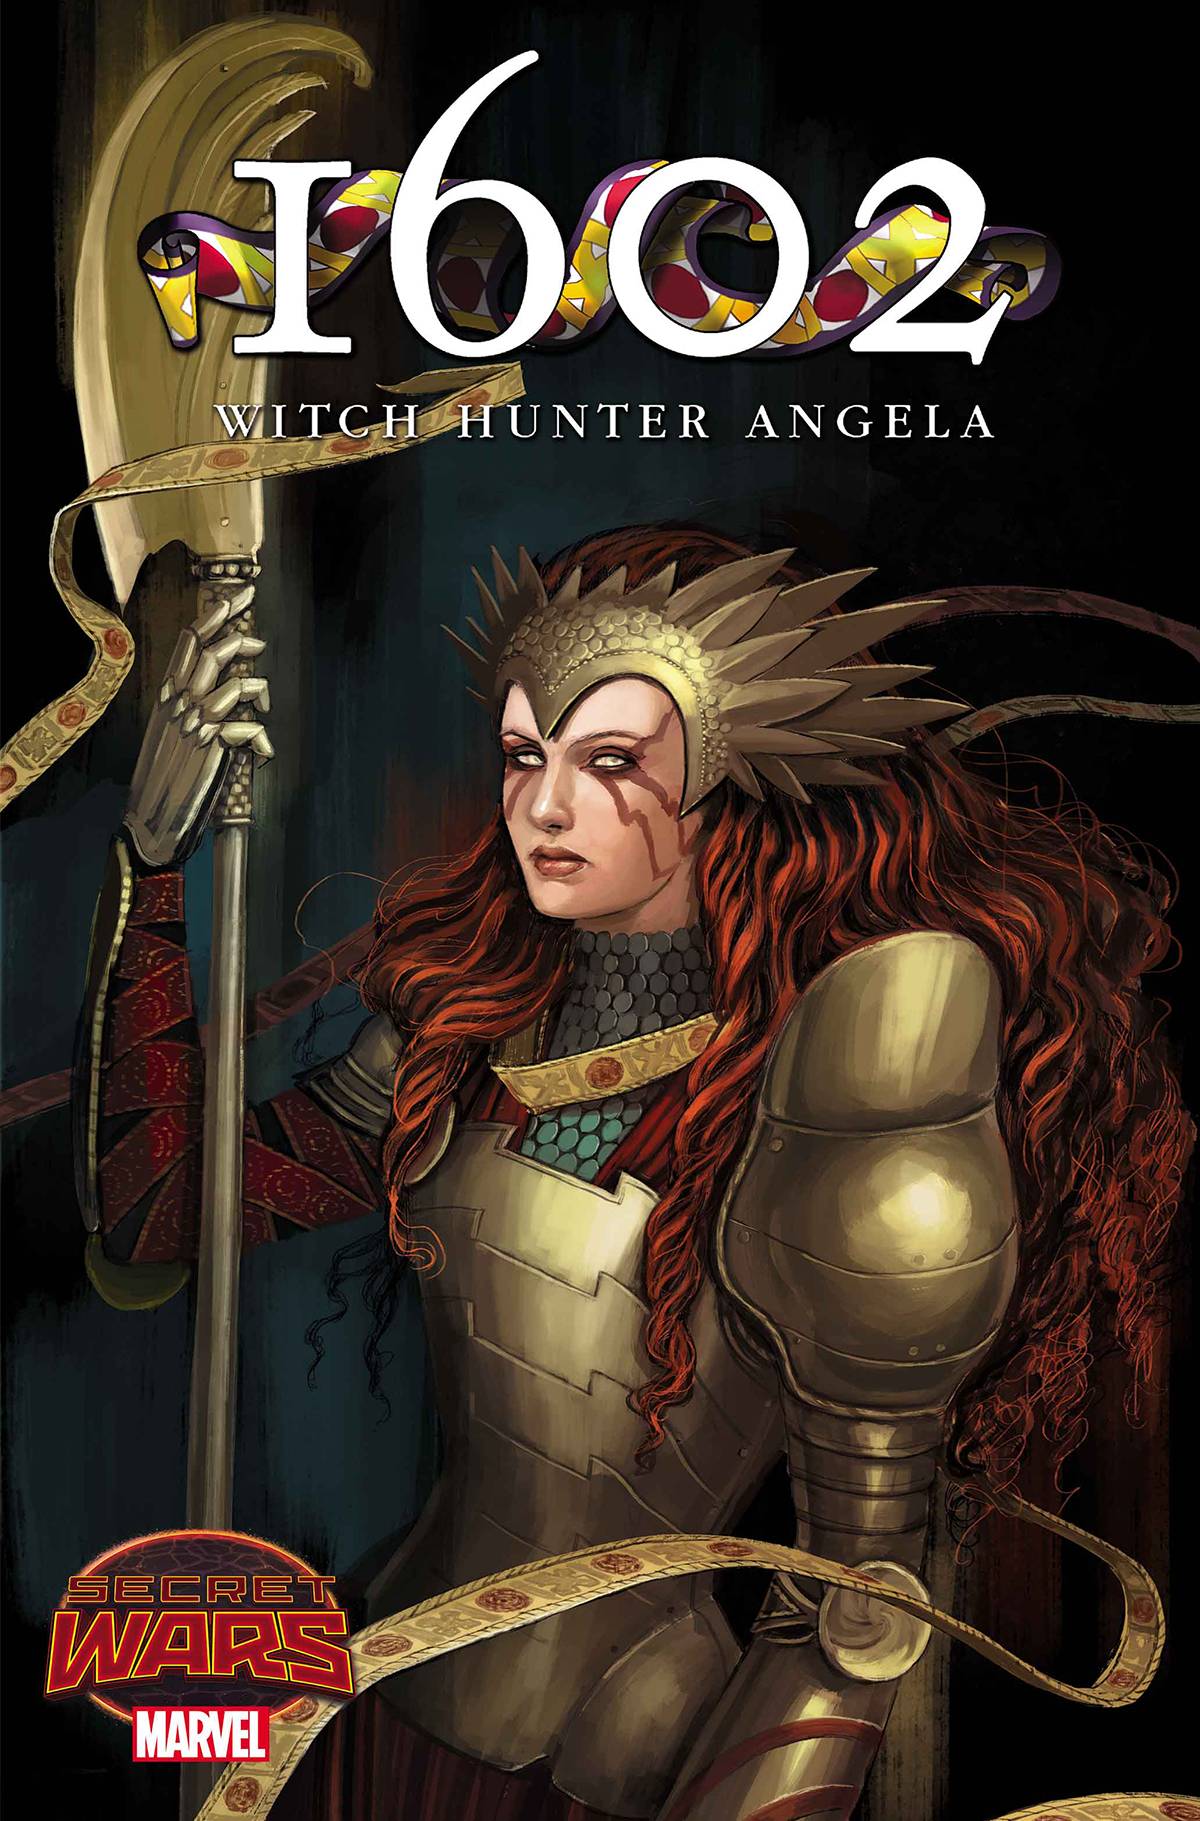 1602 Witch Hunter Angela #1 (2015)